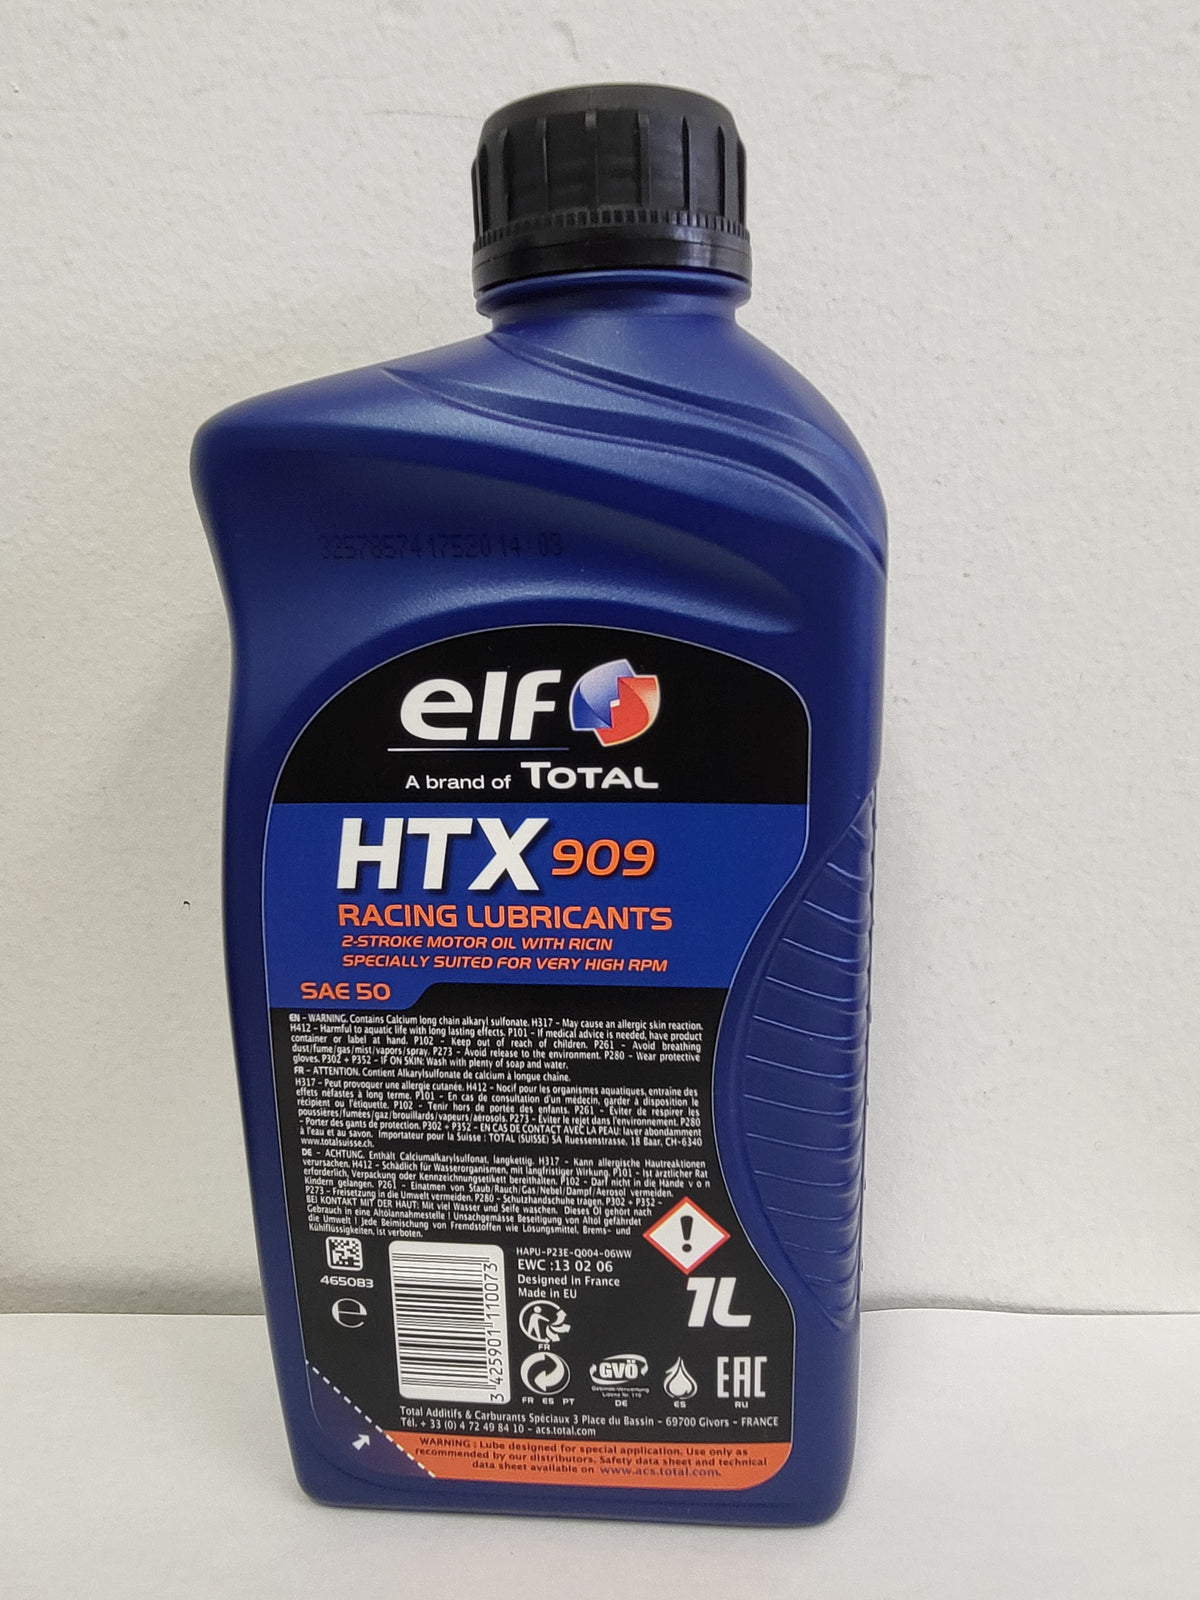 Elf HTX 909 2-Stroke Oil SAE 50 - 1 Liter